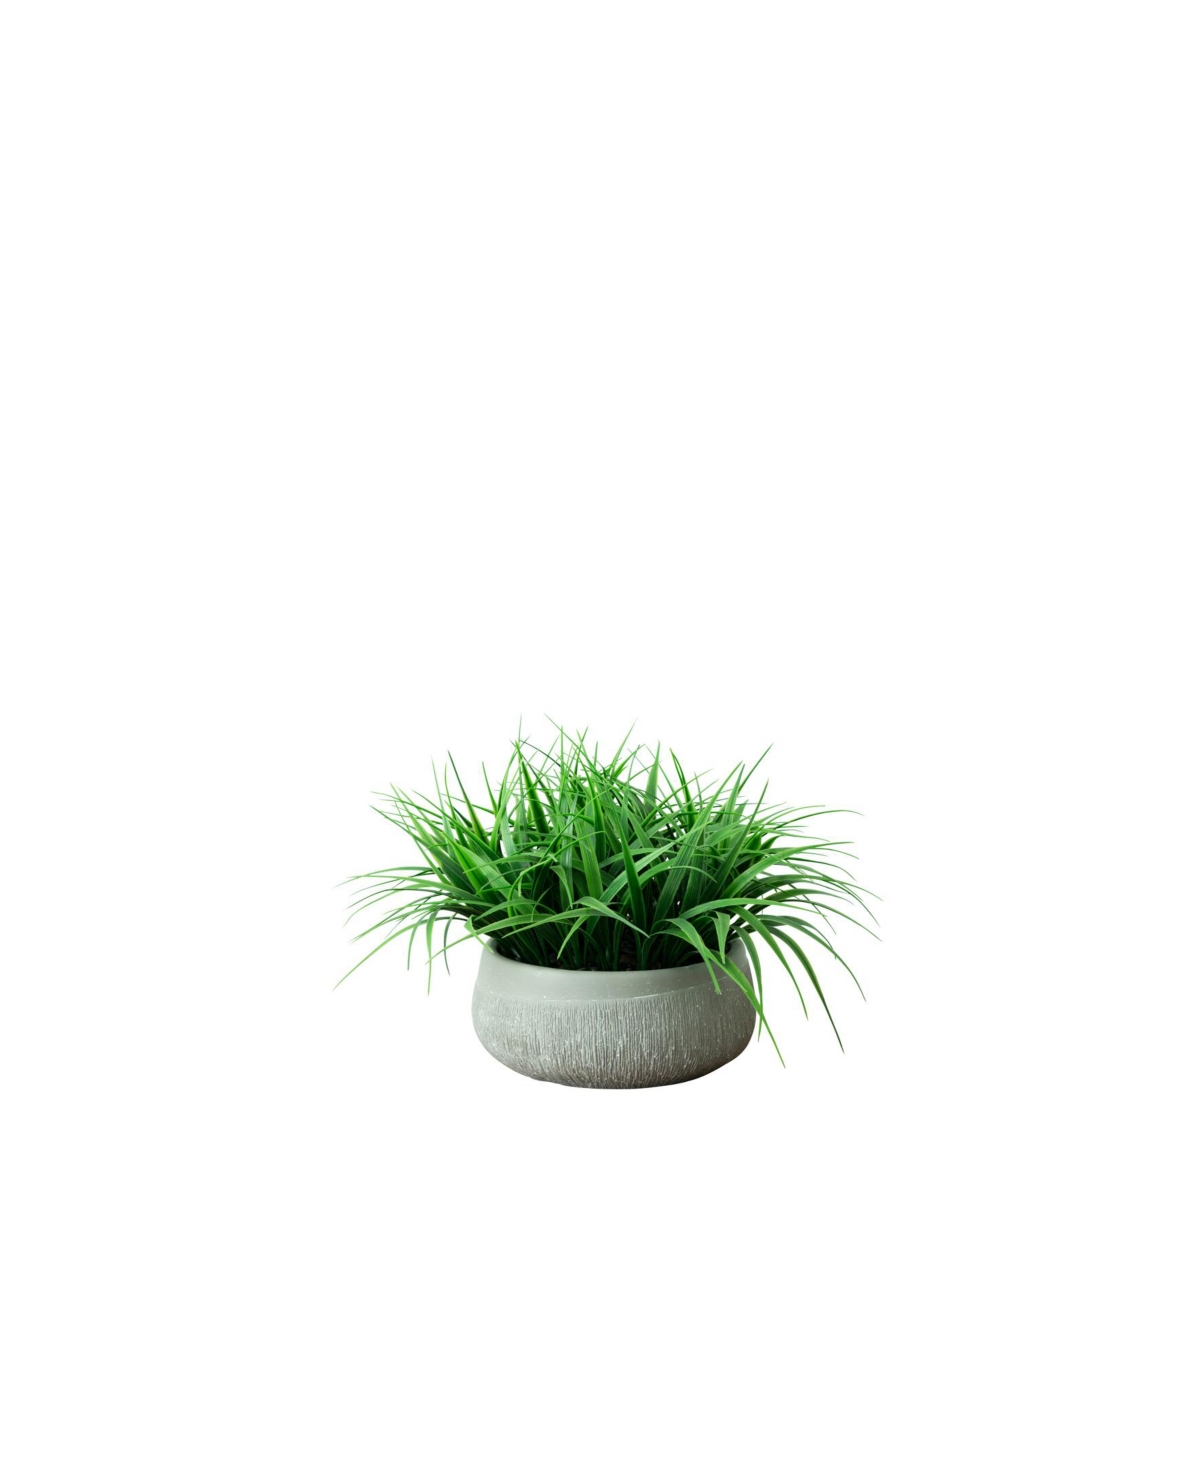 Desktop Artificial Grass Bowl in Decorative Pot - White